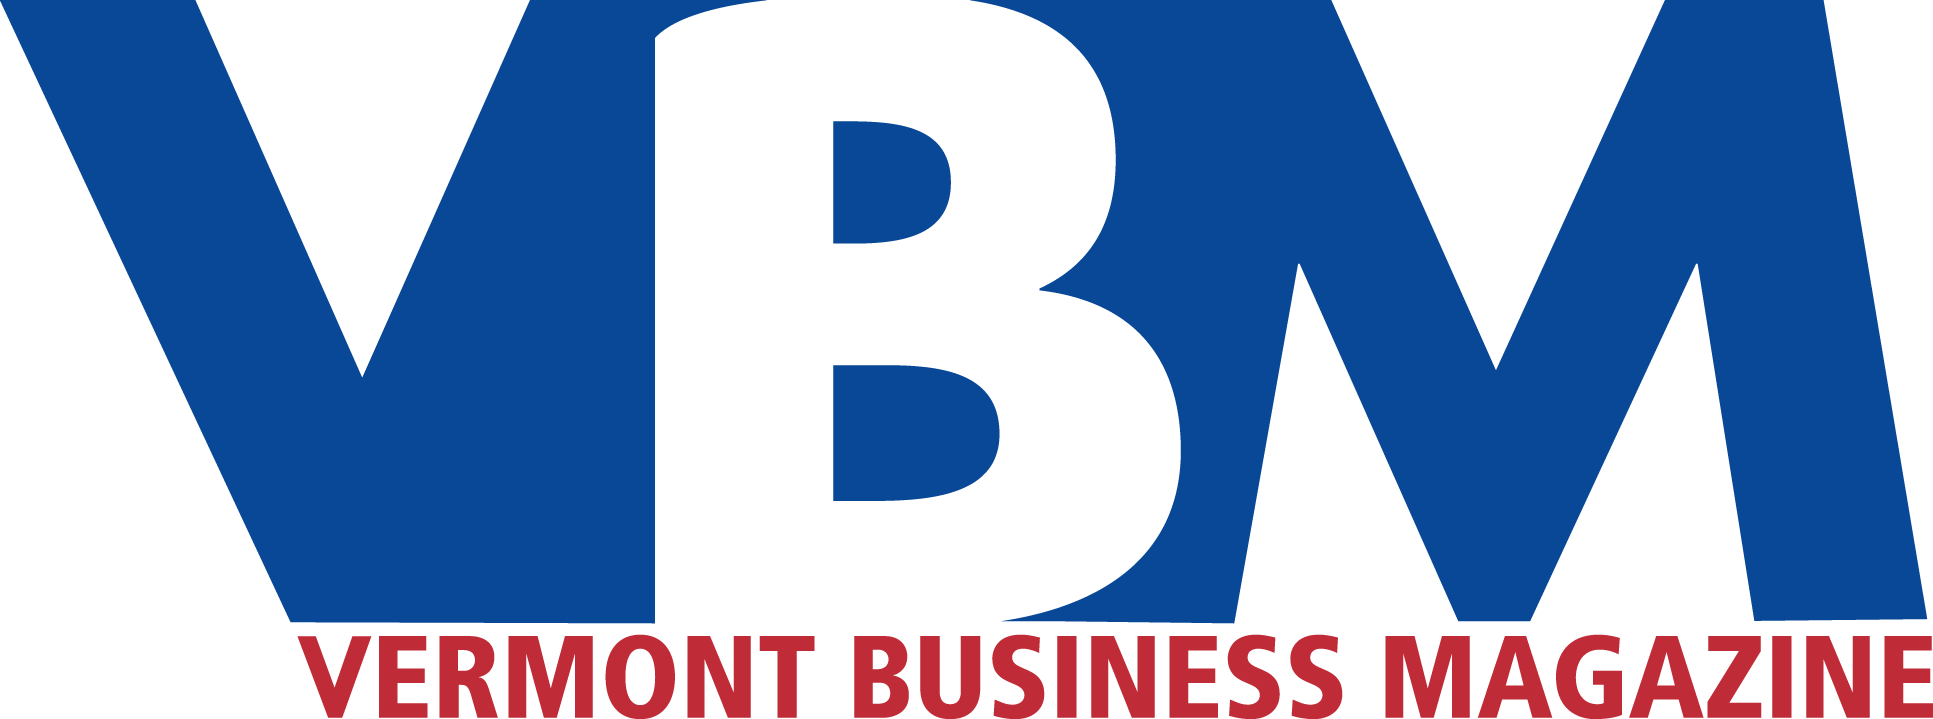 vermont business magazine vbm logo